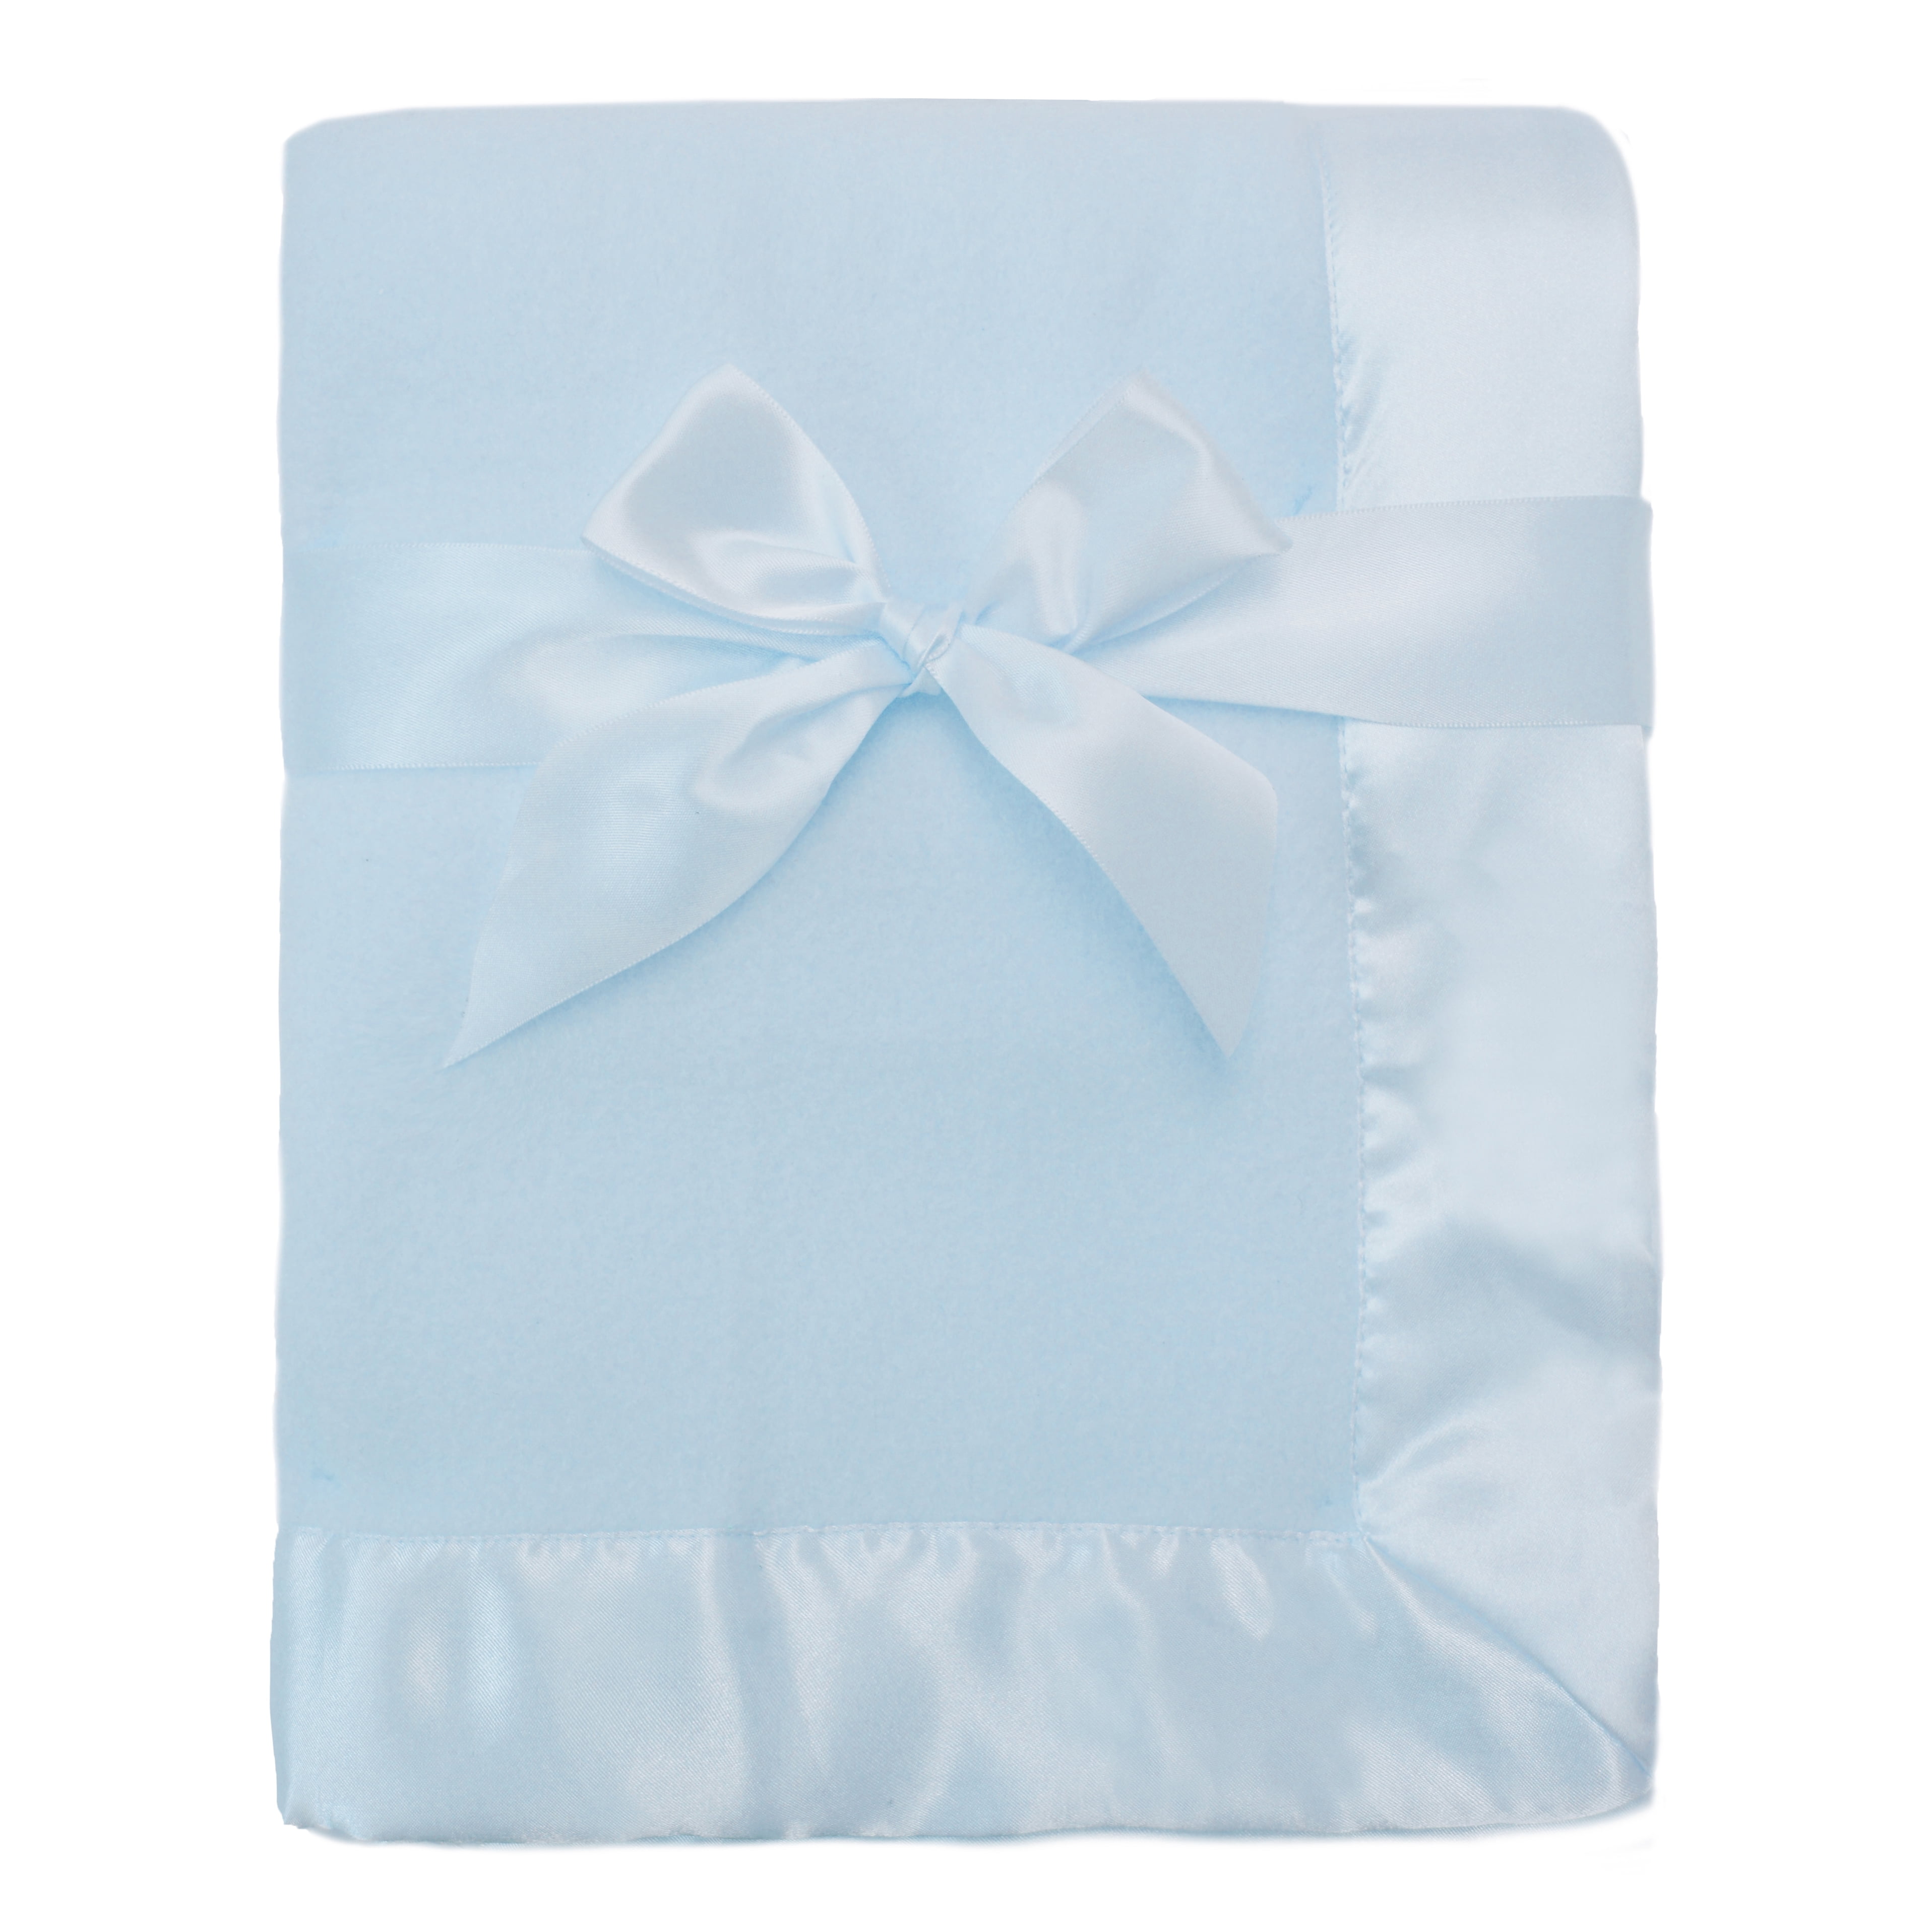 NEW Reversible Soft Cuddle Fleece Dot Satin Infant Baby Blanket with Satin Trim 